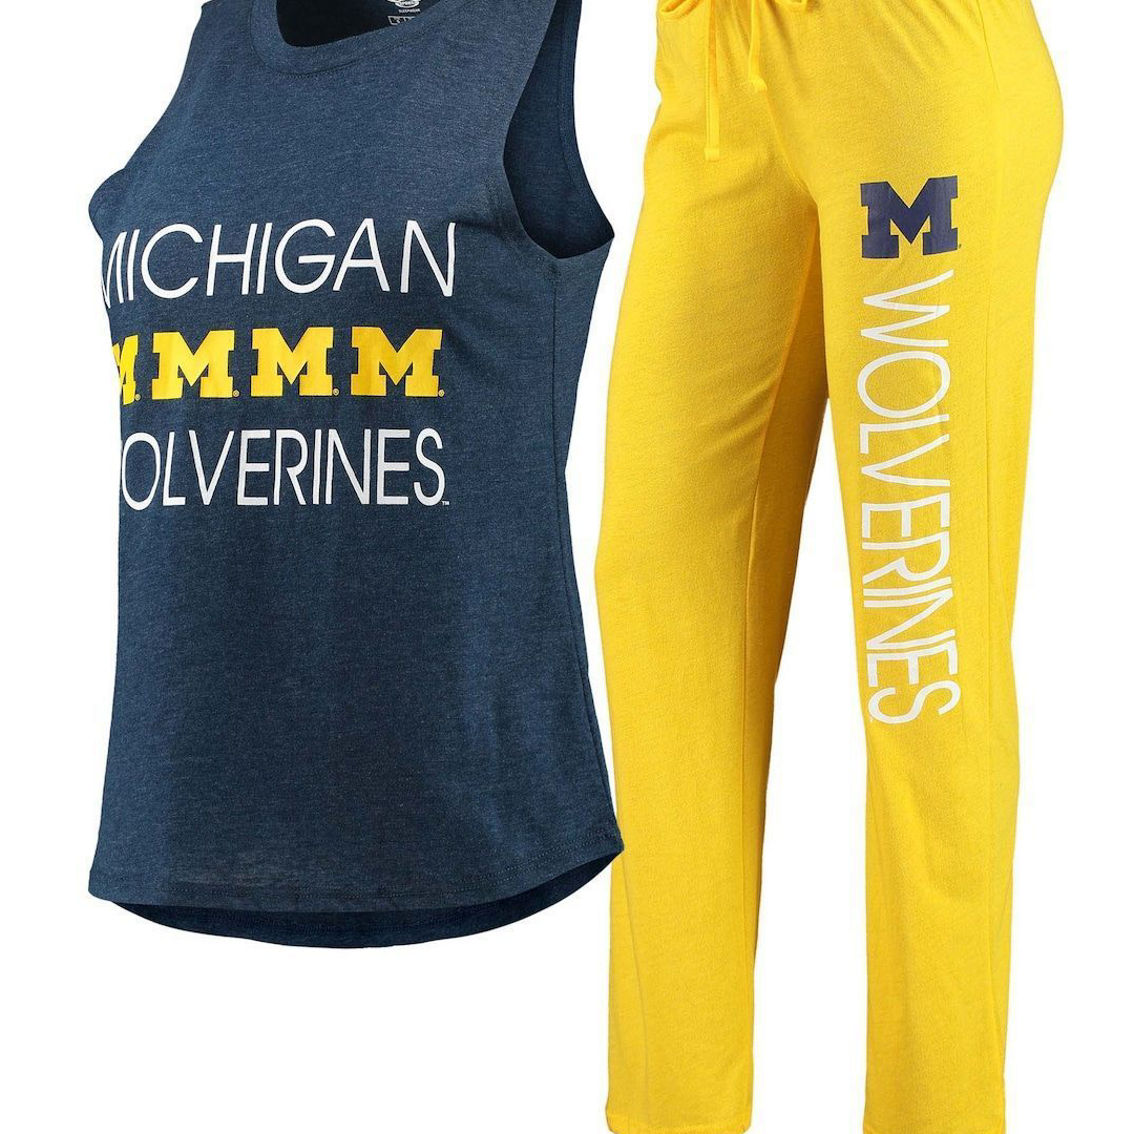 Concepts Sport Women's Maize/Navy Michigan Wolverines Tank Top & Pants Sleep Set - Image 2 of 4